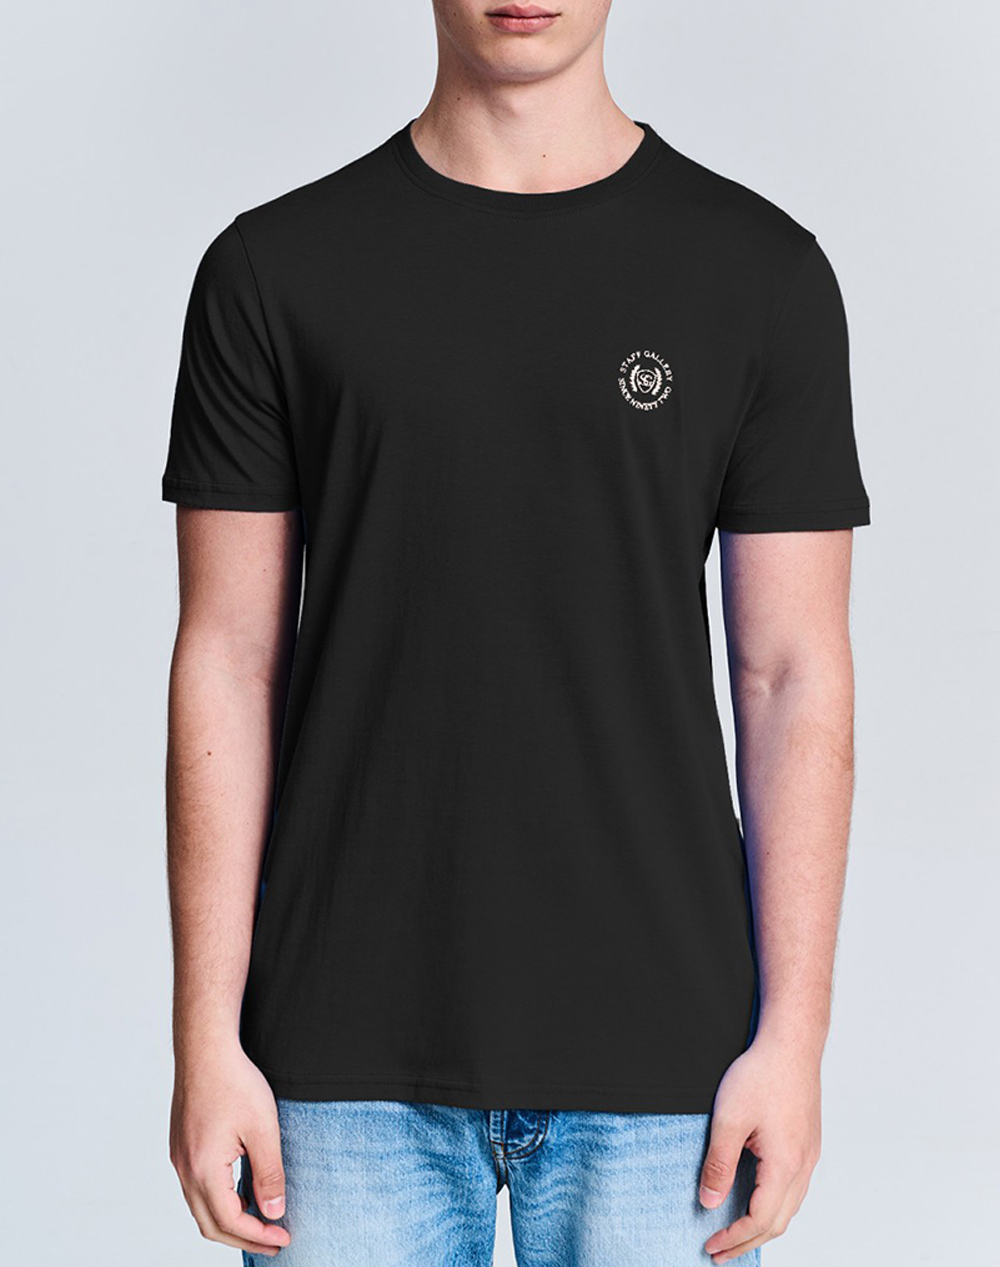 STAFF Ale Man T-Shirt Short Sleeve 100% Co 64-001.051-Ν0090 Black